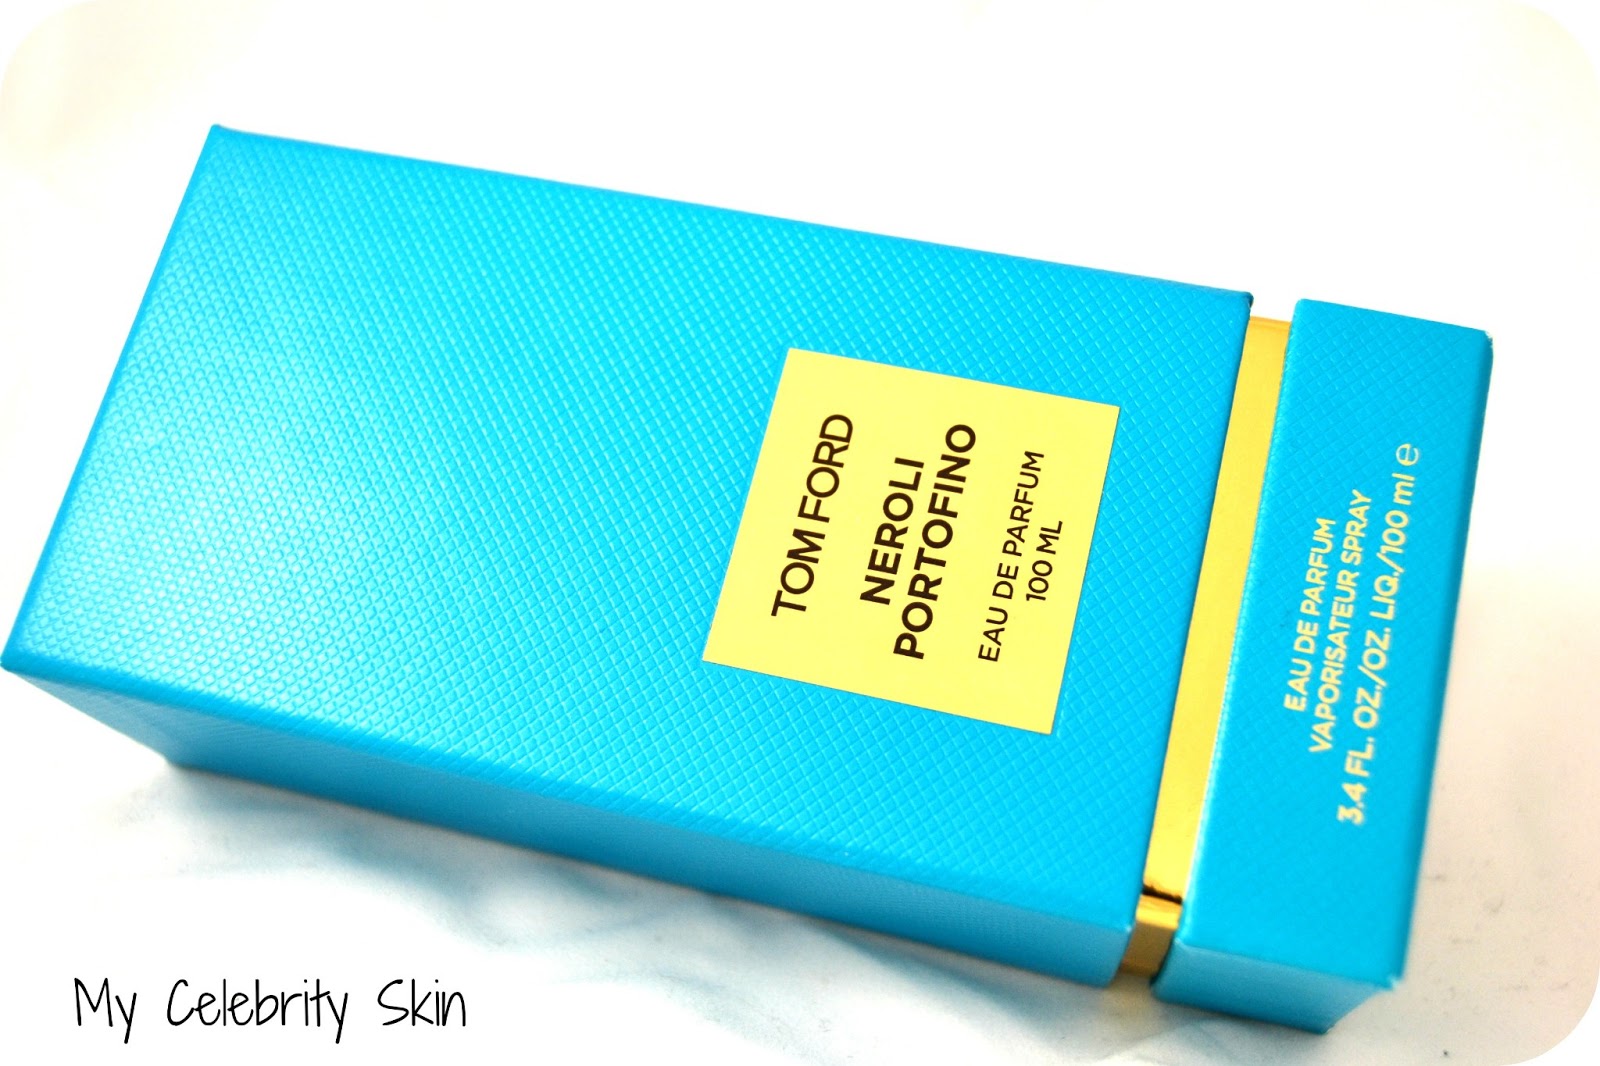 El luminoso perfume unisex Neroli Portofino de Tom Ford | My Celebrity Skin